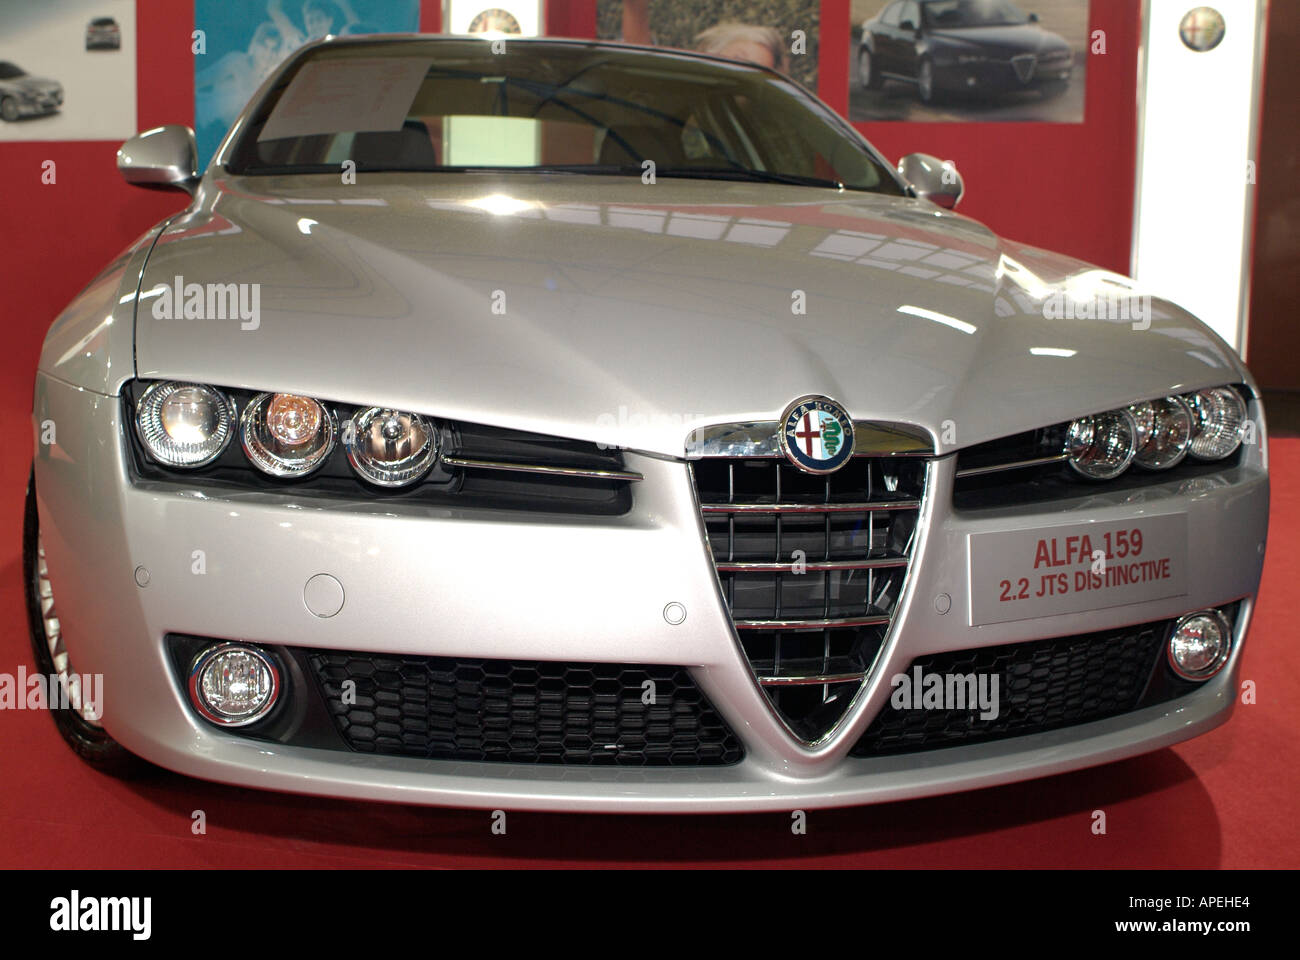 Alfa Romeo 159 images (2 of 13)